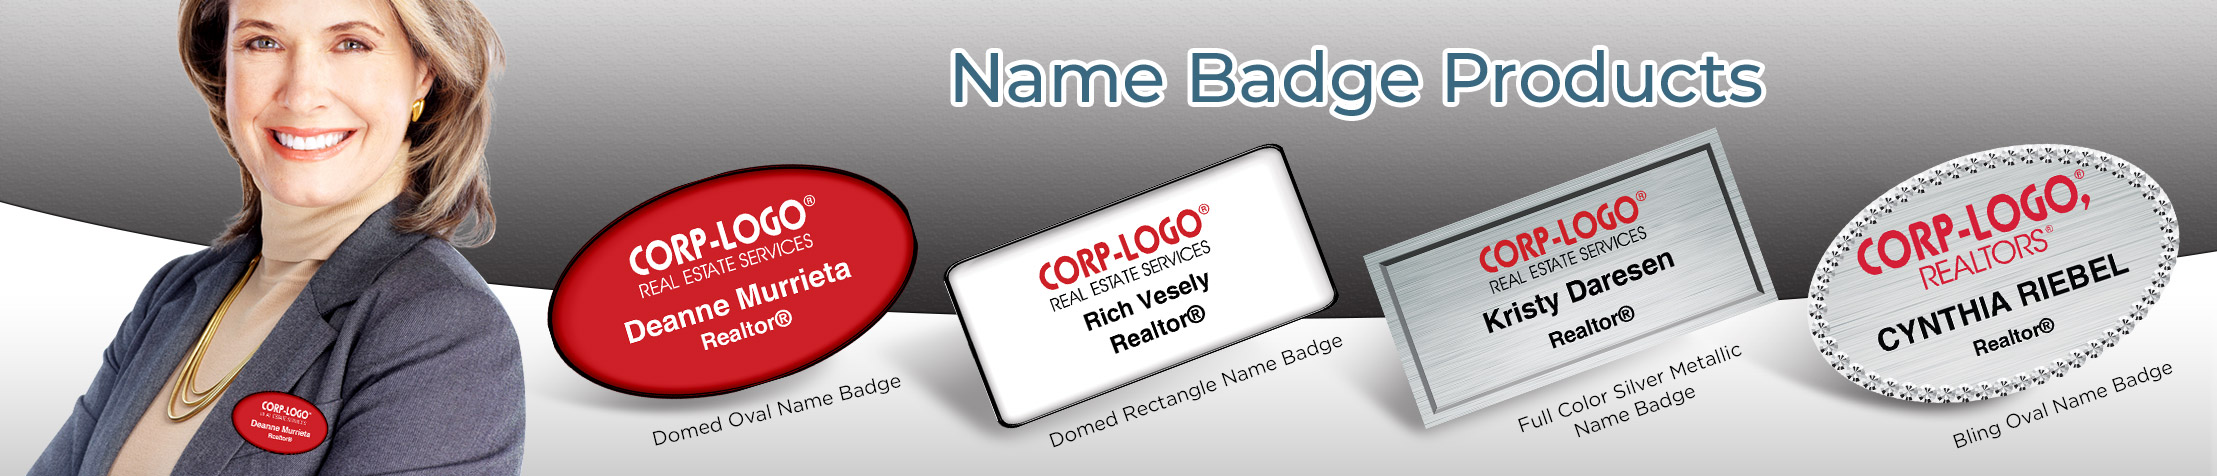 Crye-Leike Realtors Real Estate Name Badge Products - Crye-Leike Realtors Name Tags for Realtors | BestPrintBuy.com